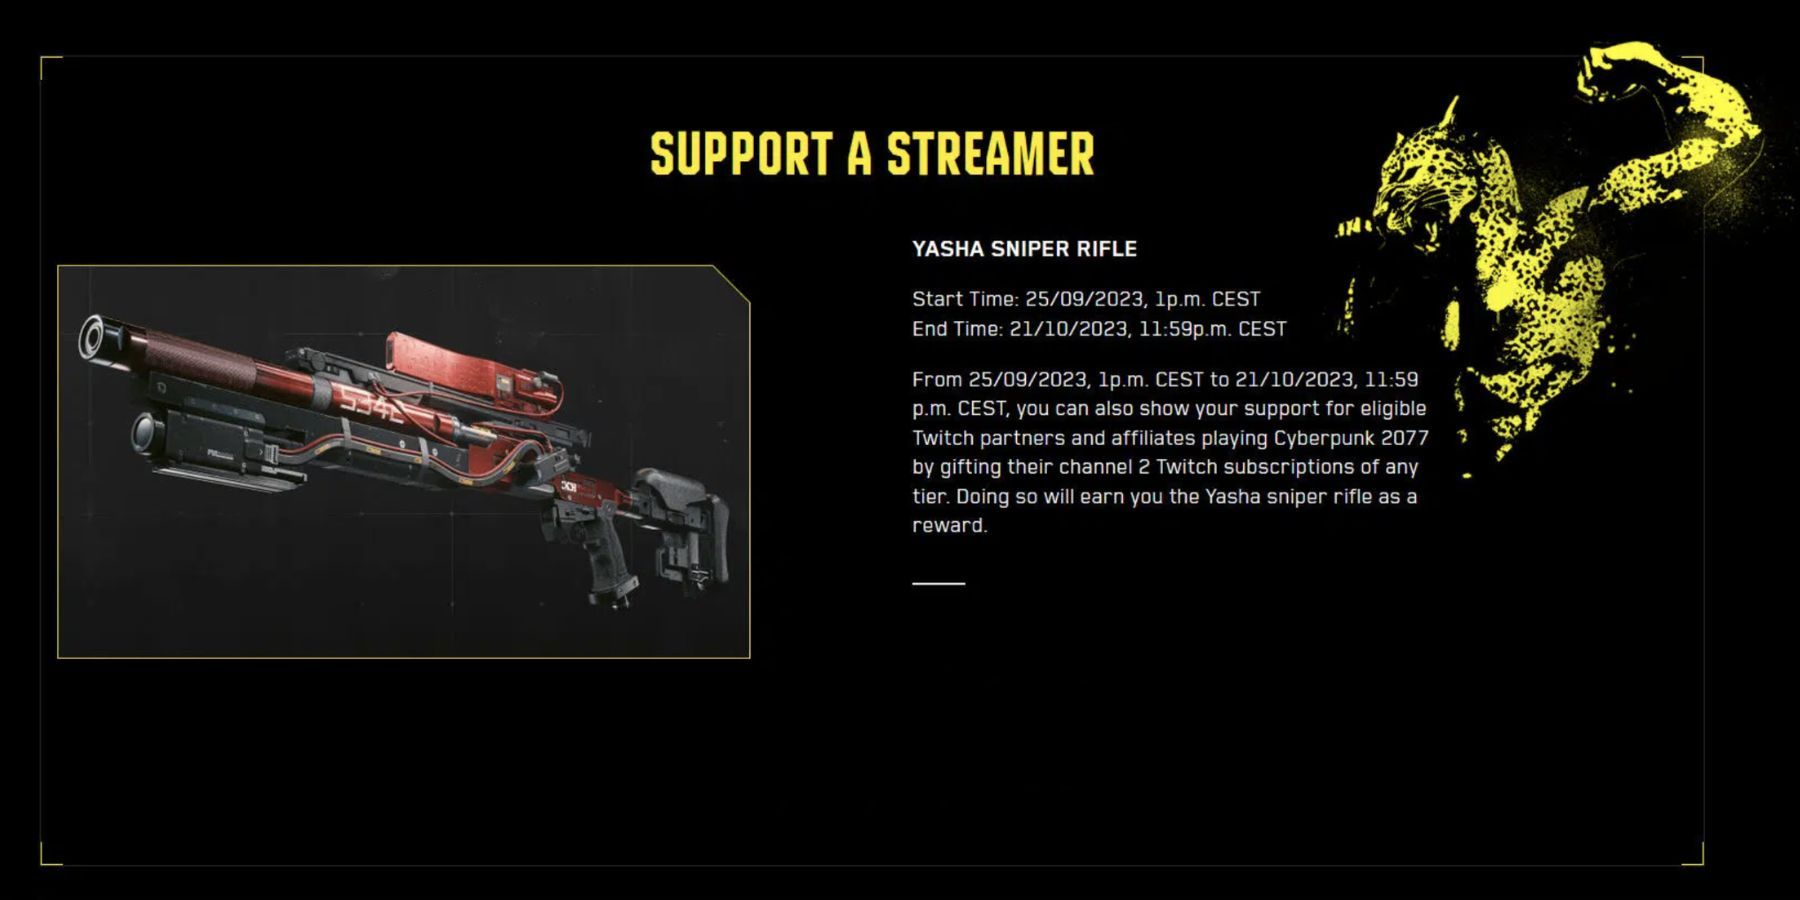 Yasha's Sniper Rifle Twitch Drop Details